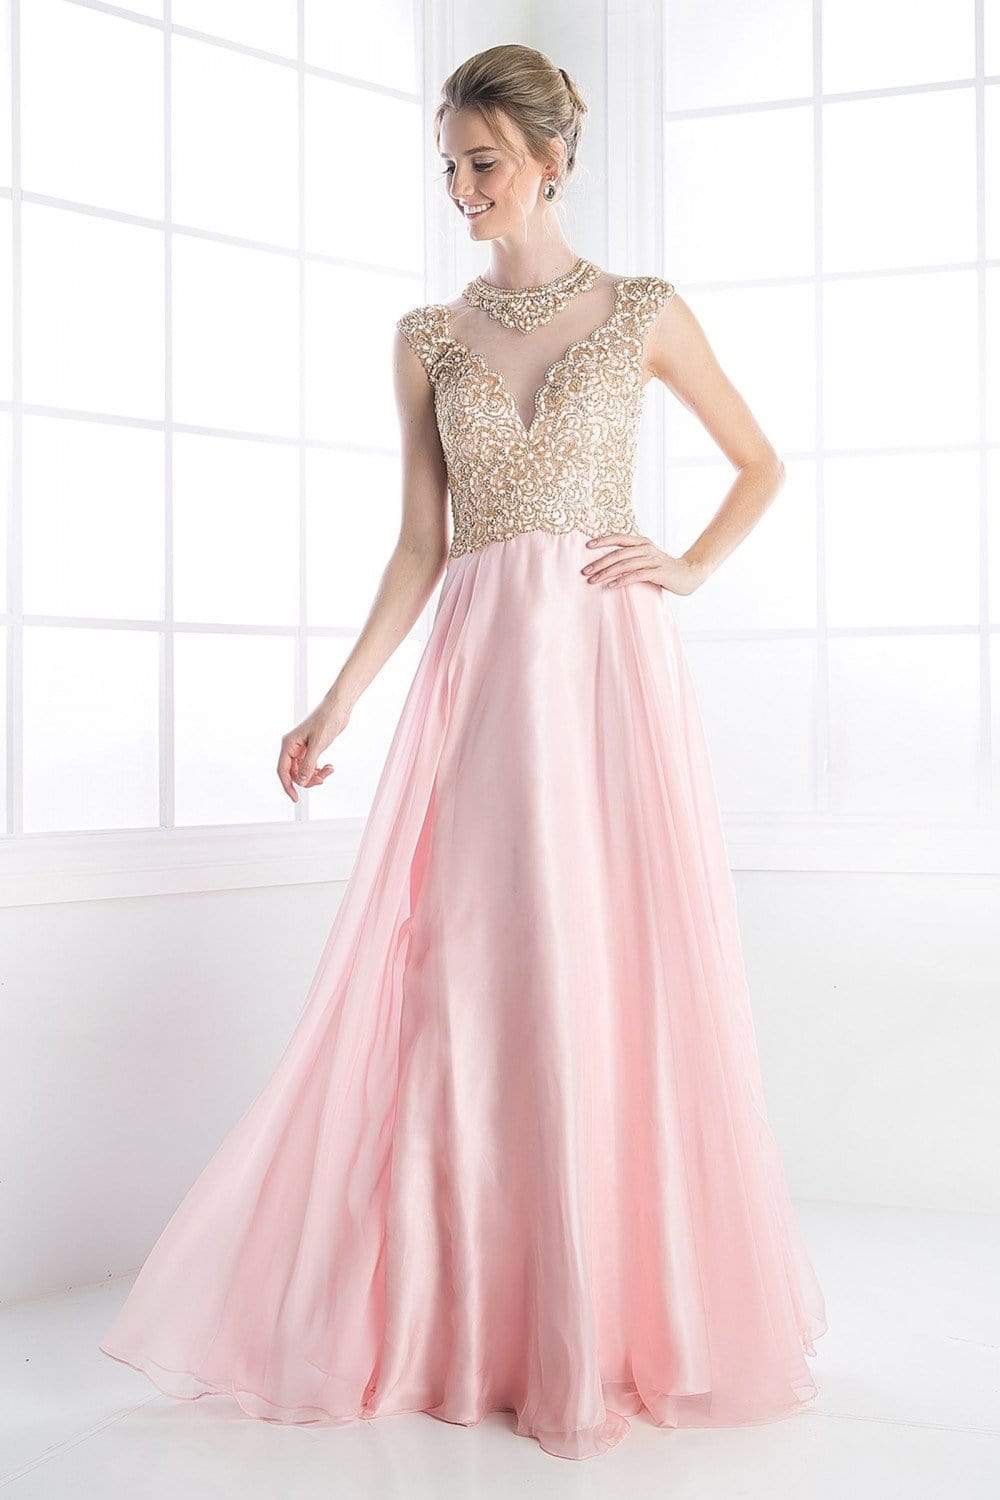 Cinderella Divine - Embellished Illusion Jewel Neck A-line Gown